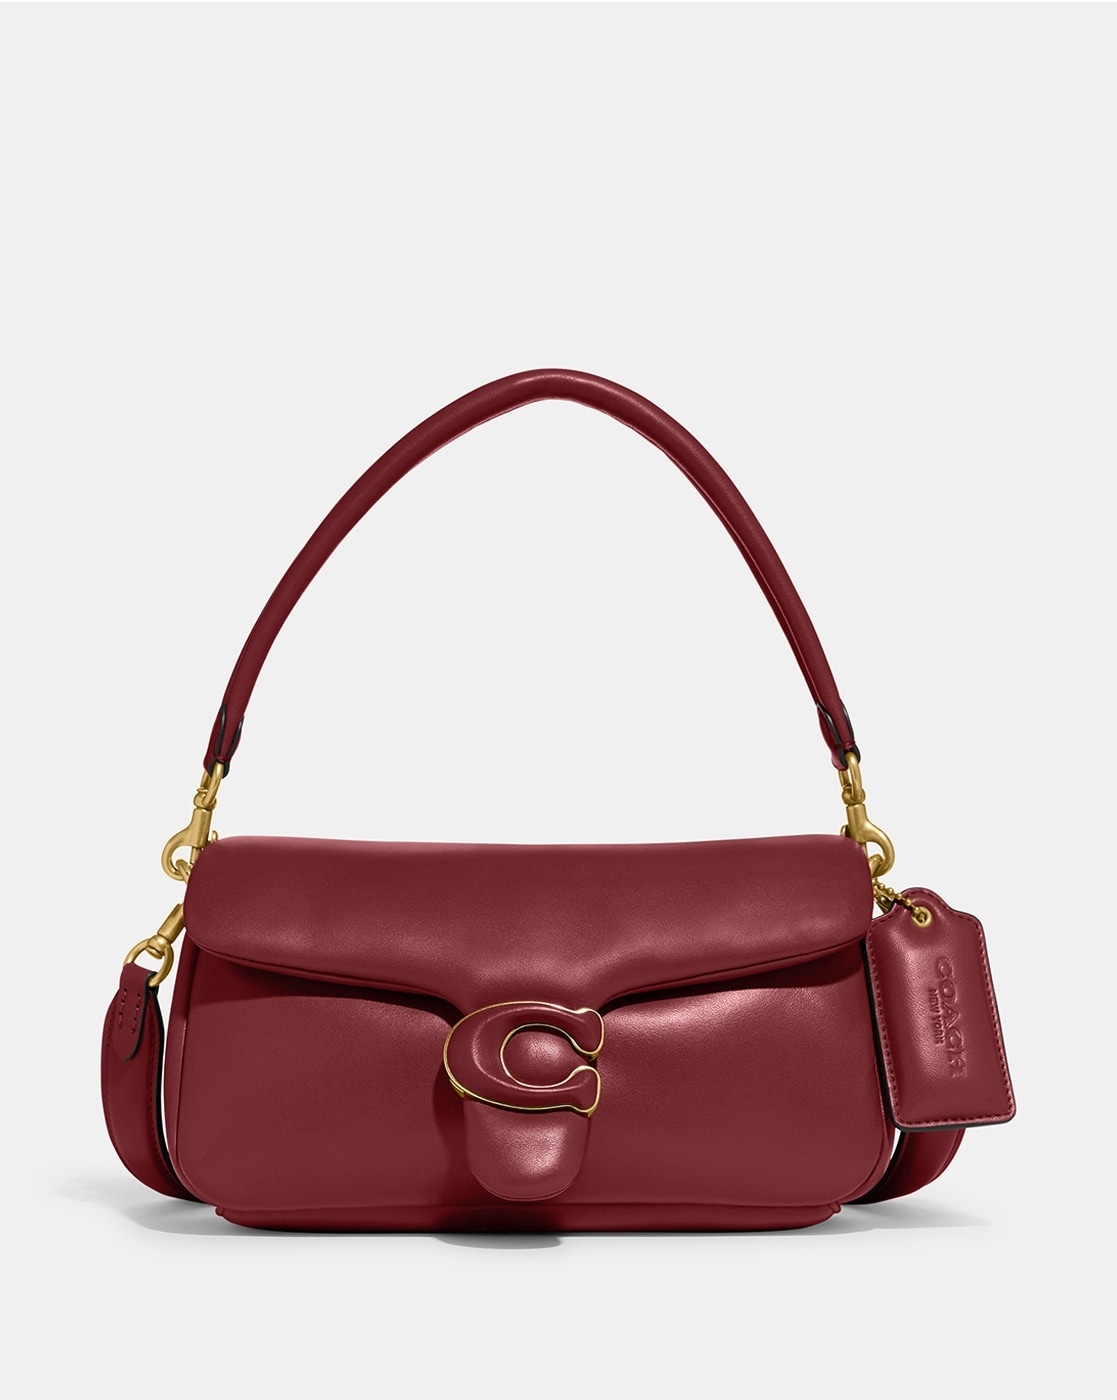 COACH burgundy tote bag | Burgundy tote, Fashion, Coach zip top tote